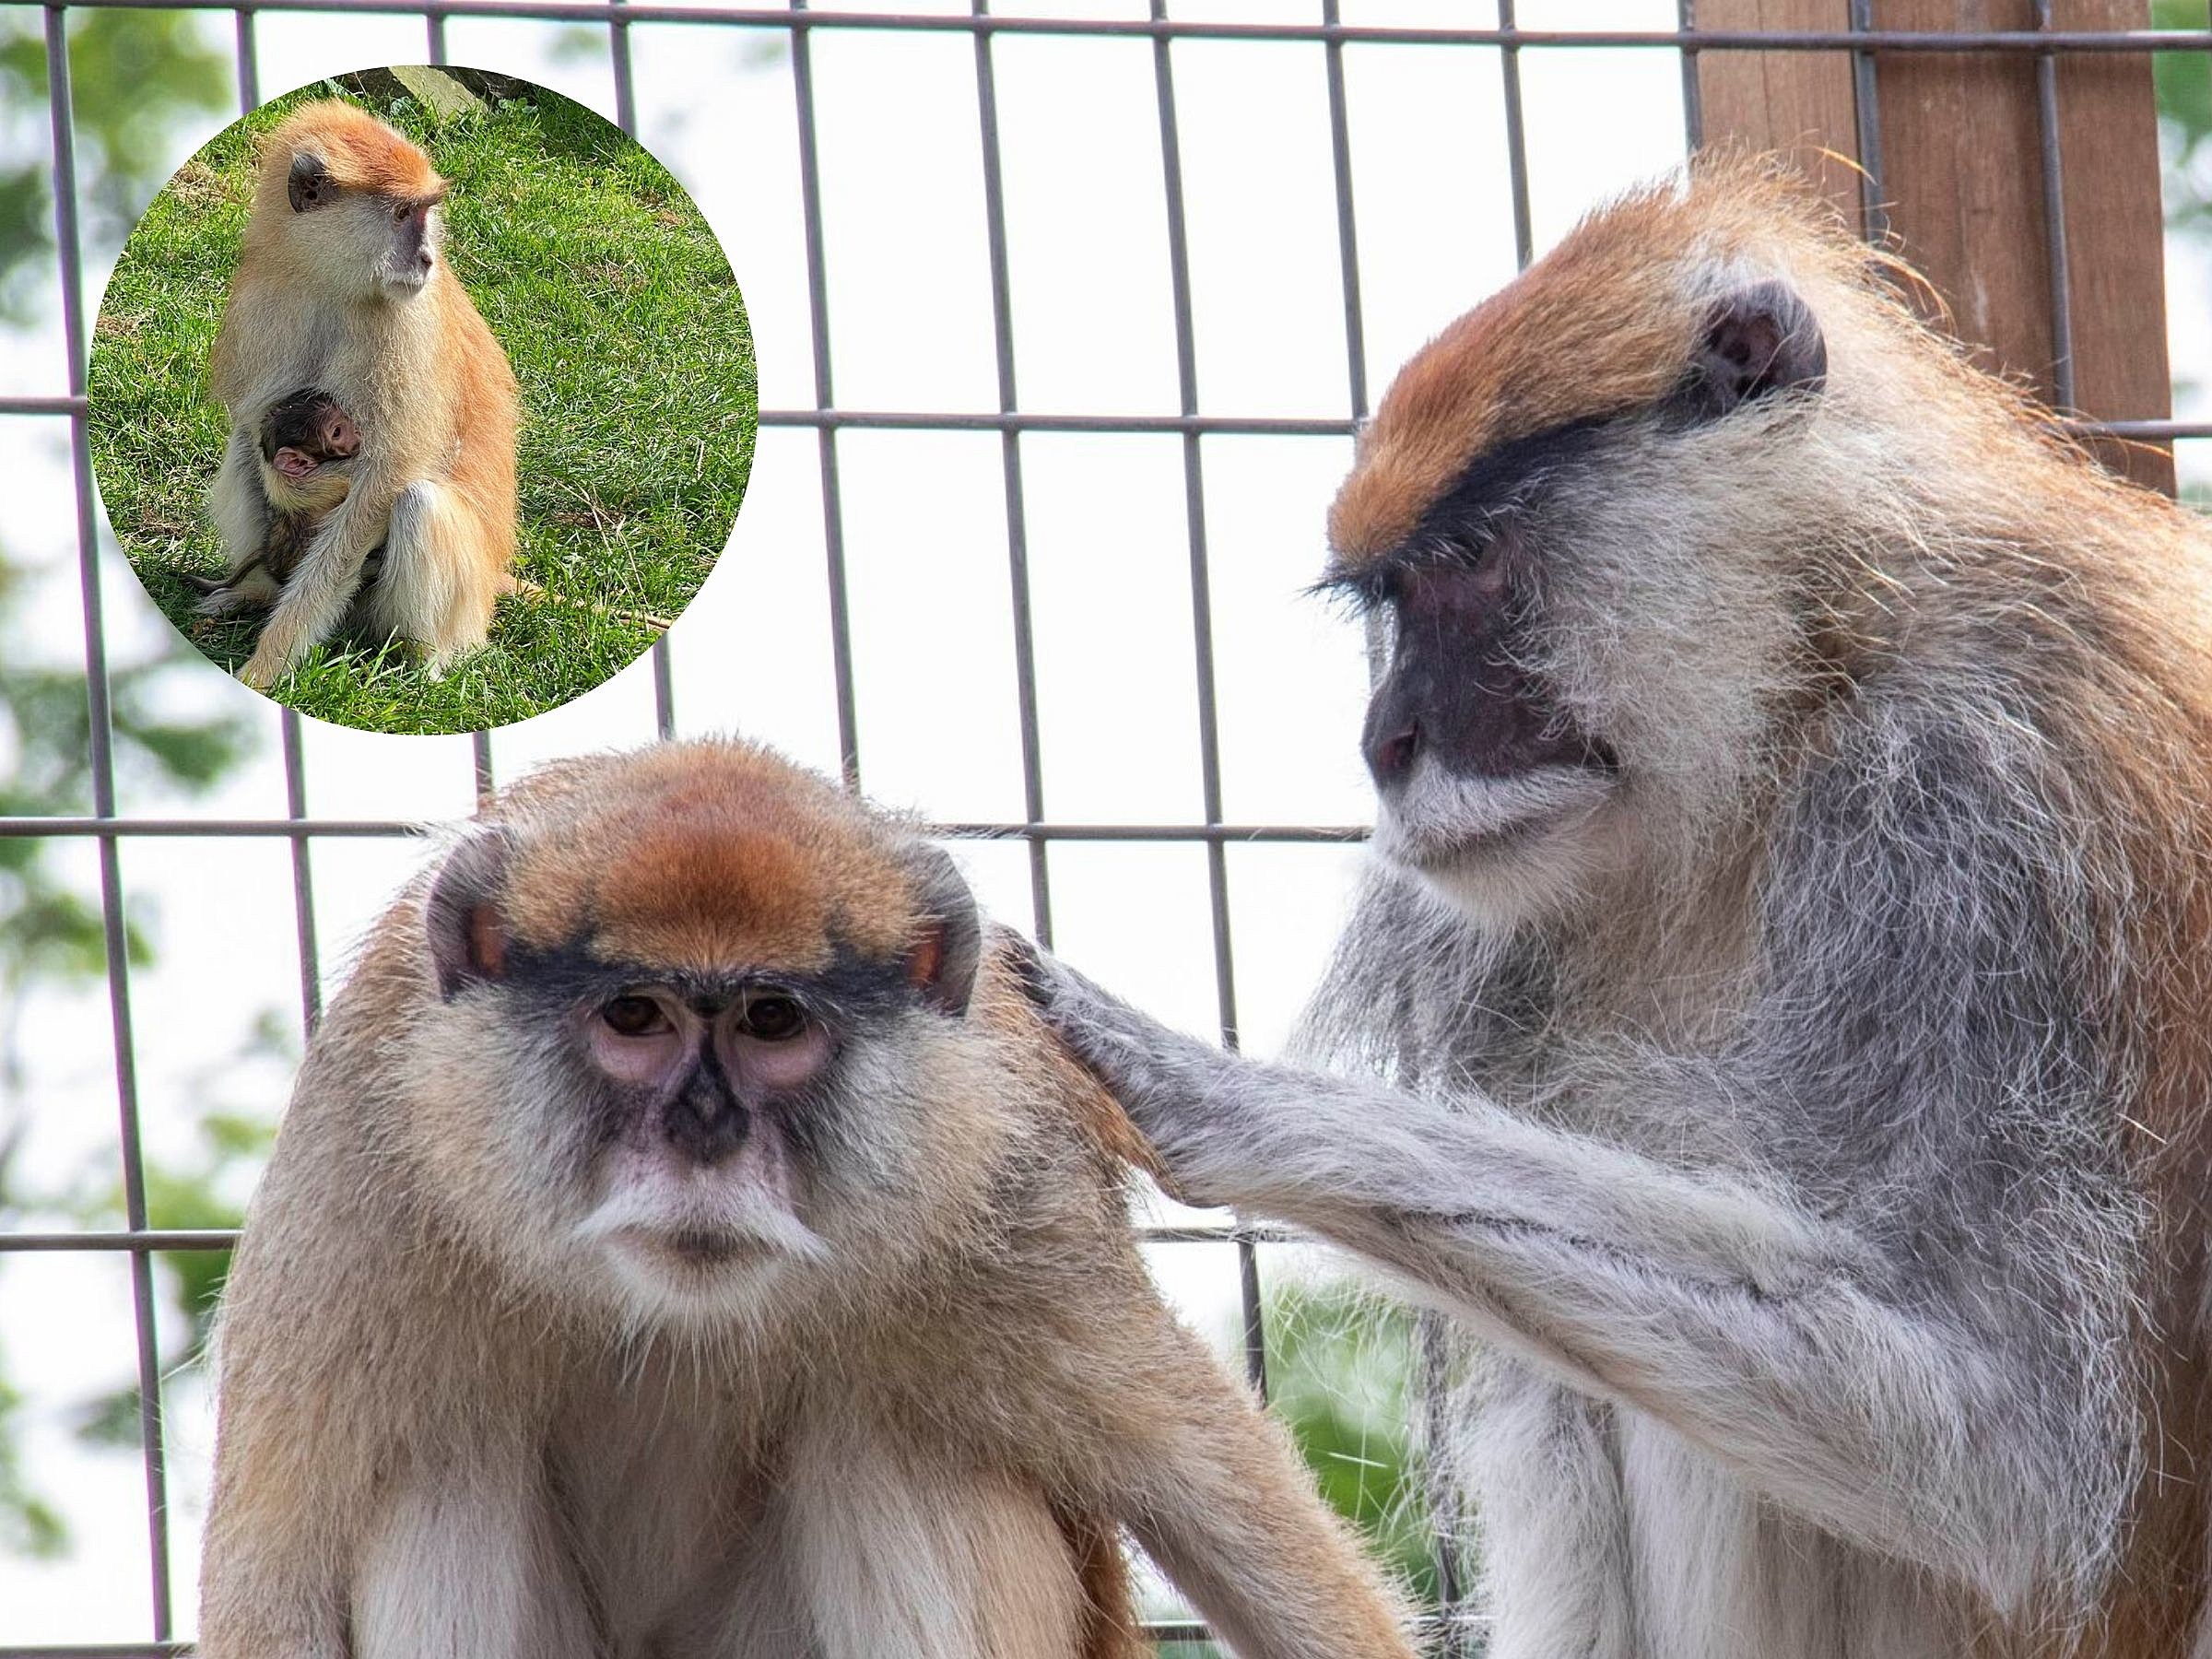 Animal Adventure Park Near Binghamton Welcomes Newborn Monkey